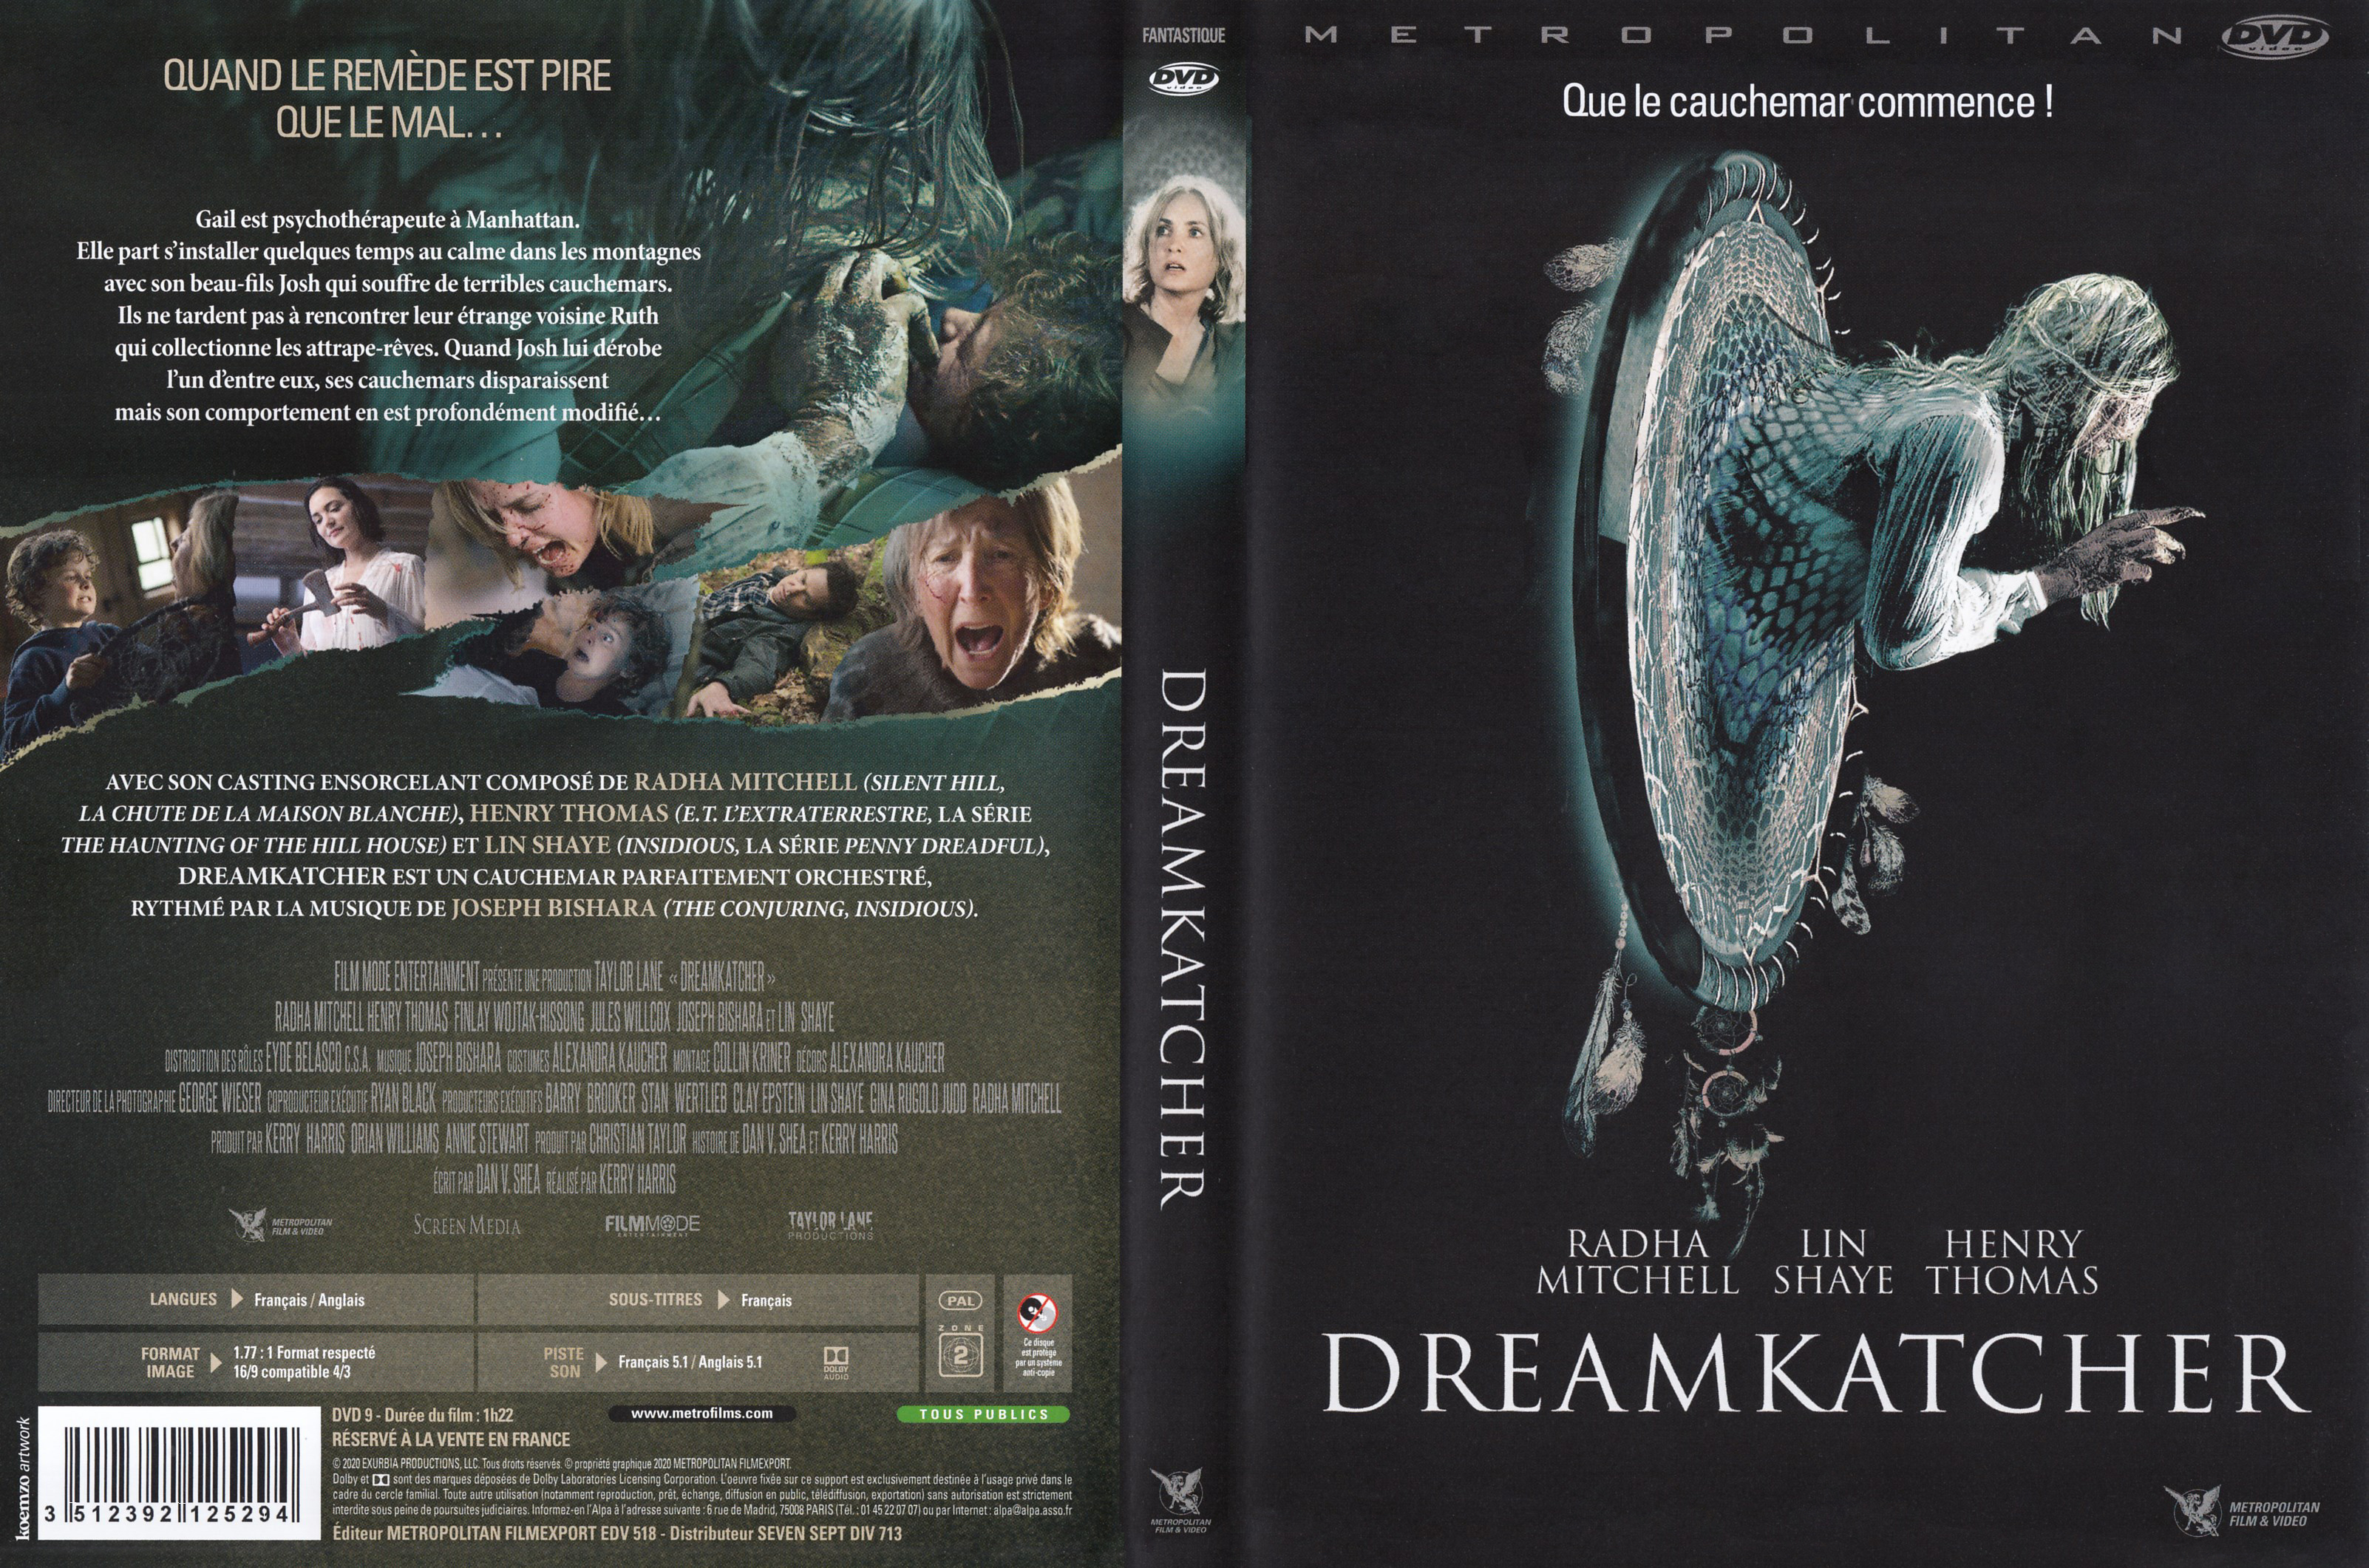 Jaquette DVD Dreamkatcher